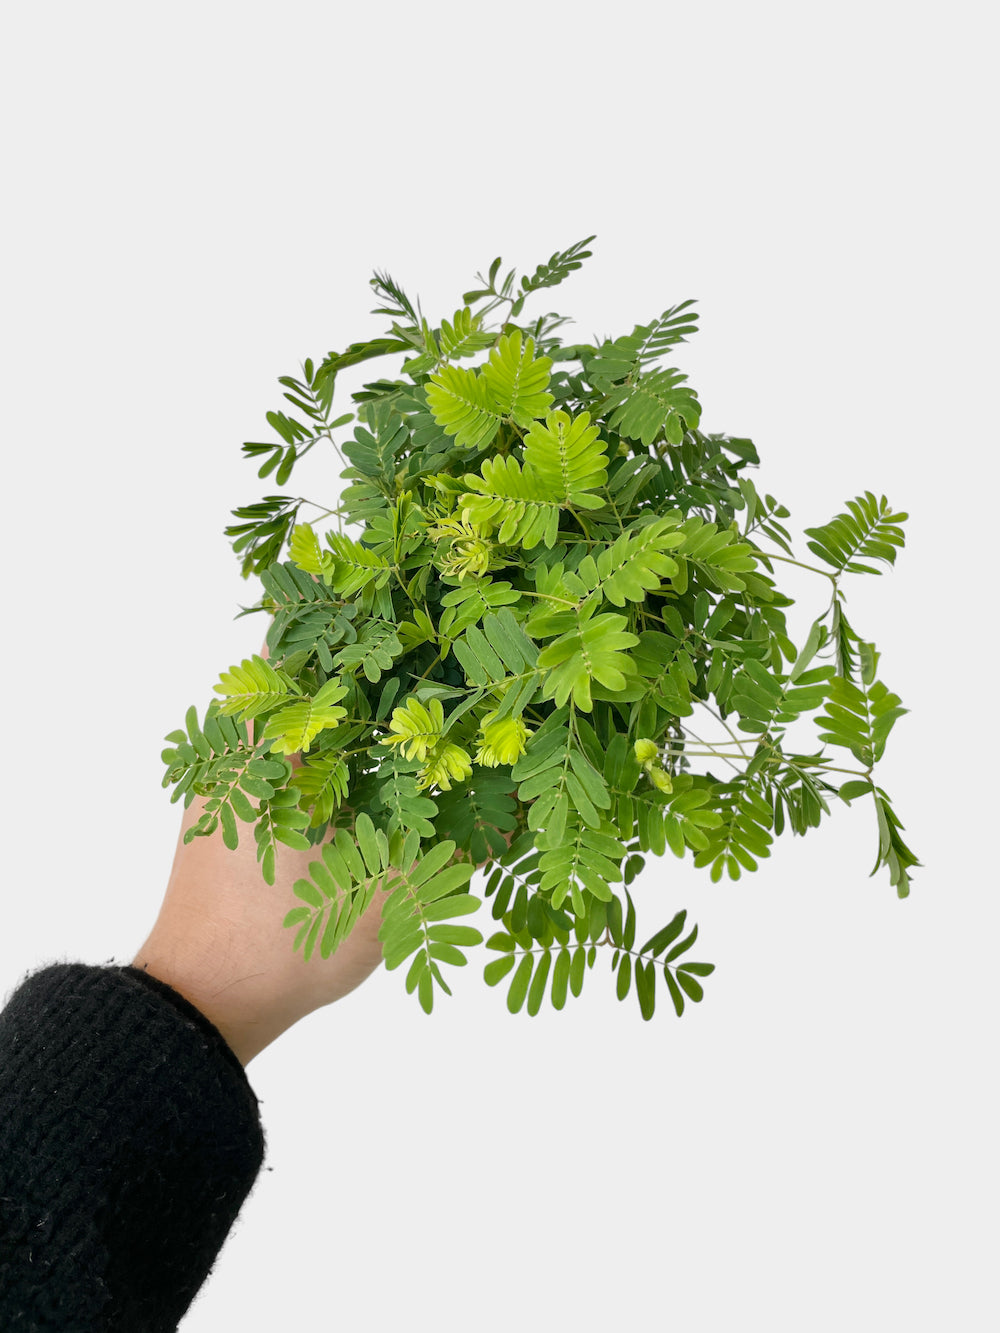 Mimosa pudica aka Sensitive Plant